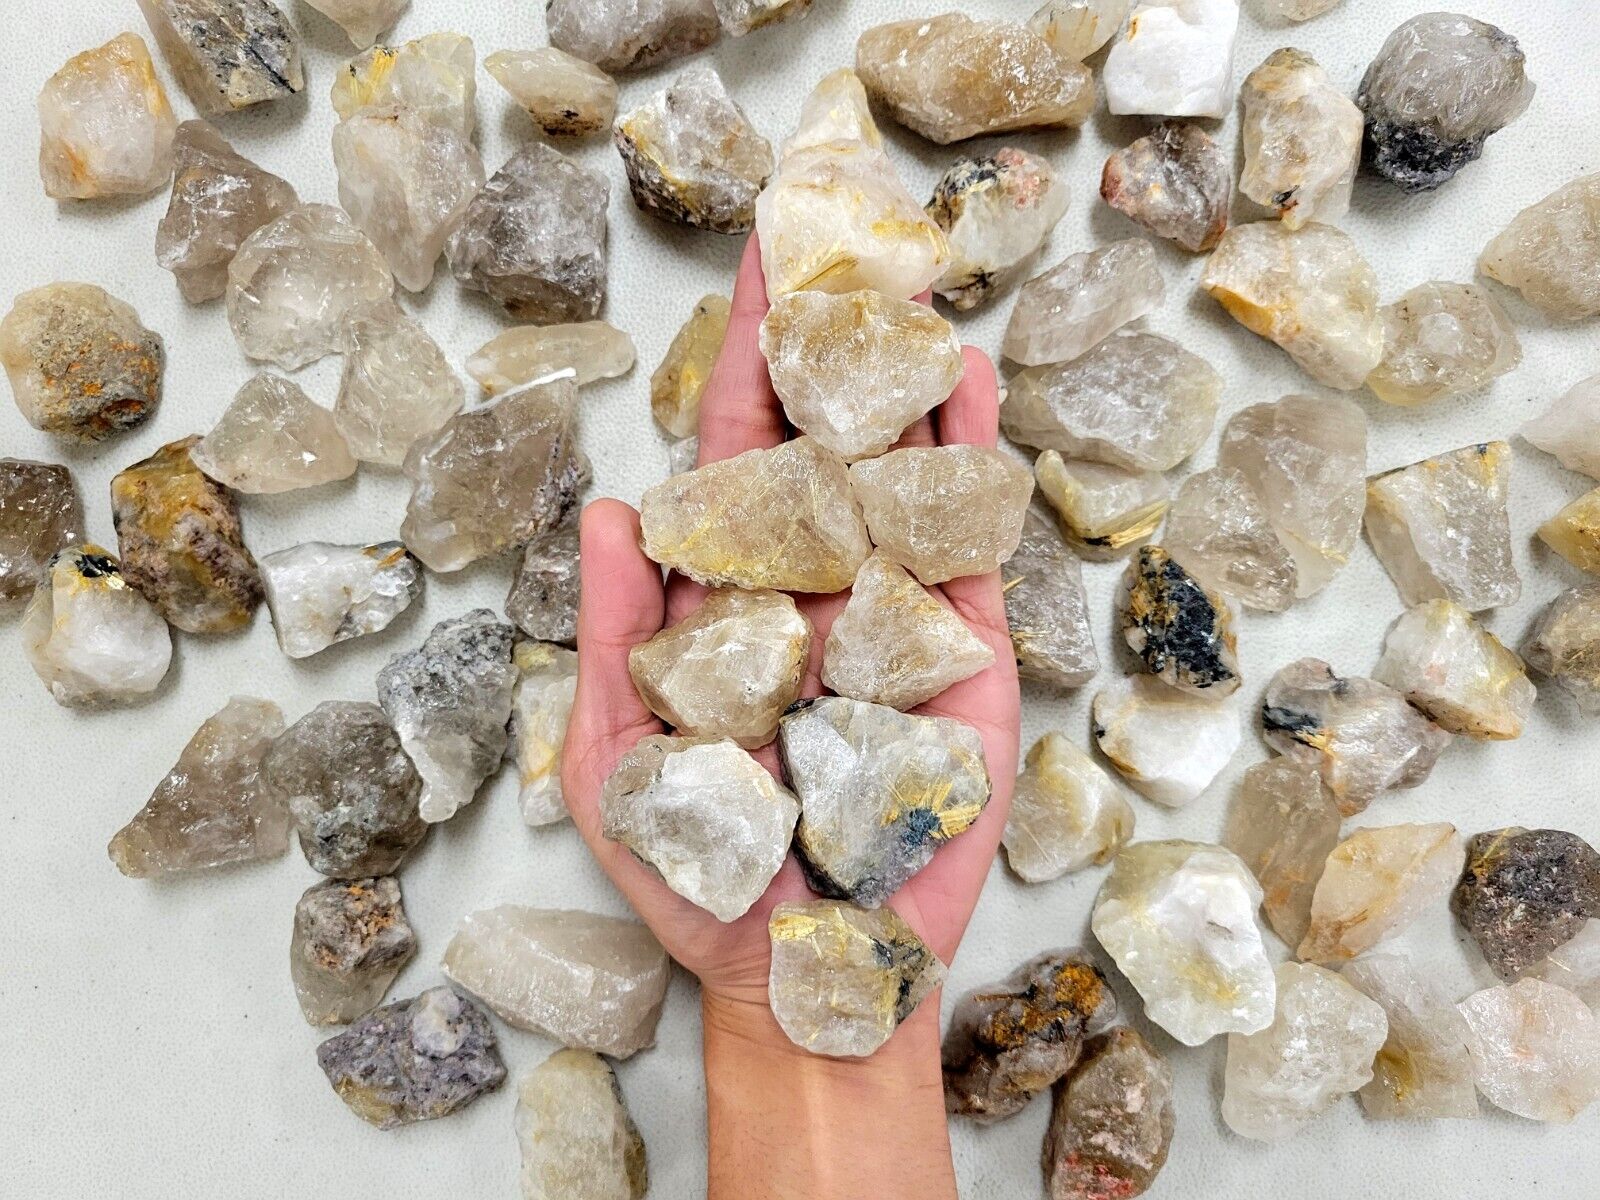 Rough Rutilated Quartz Crystals - Bulk Rutile Quartz Stones for Tumbling Healing